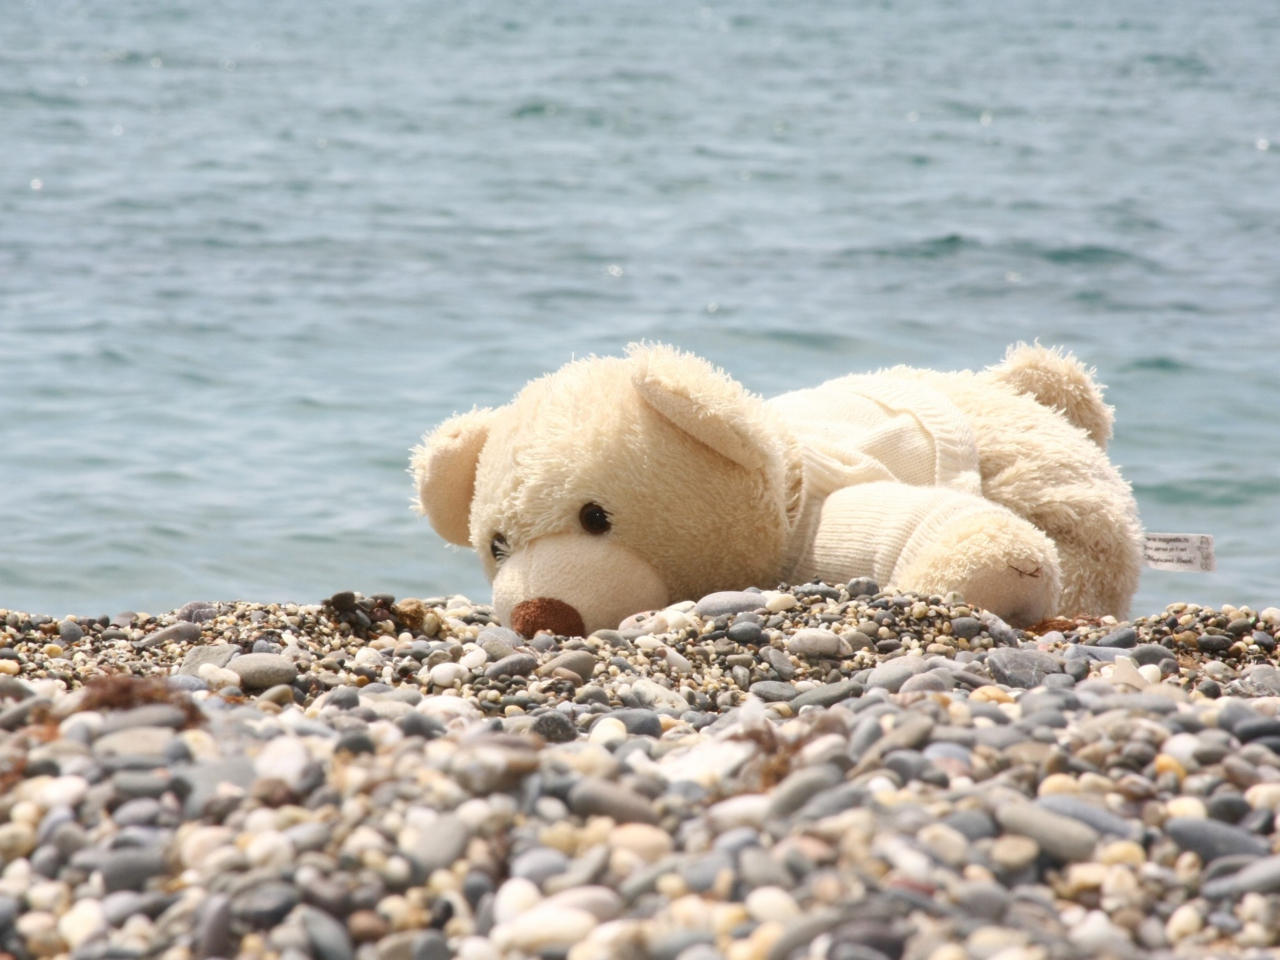 White Teddy Forgotten On Beach wallpaper 1280x960